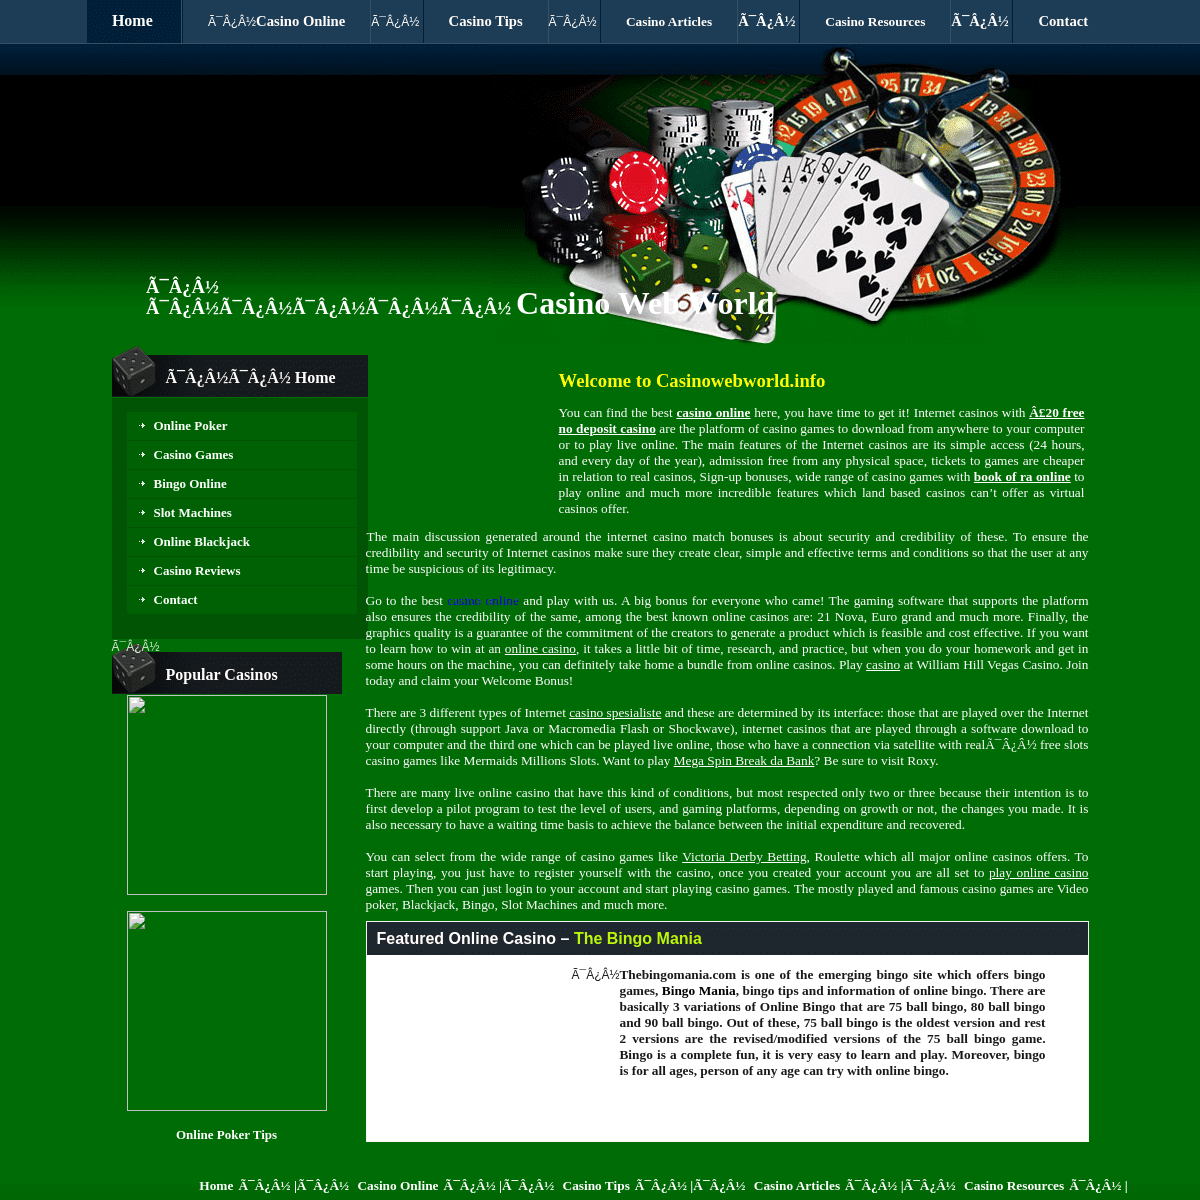 A complete backup of https://casinowebworld.info